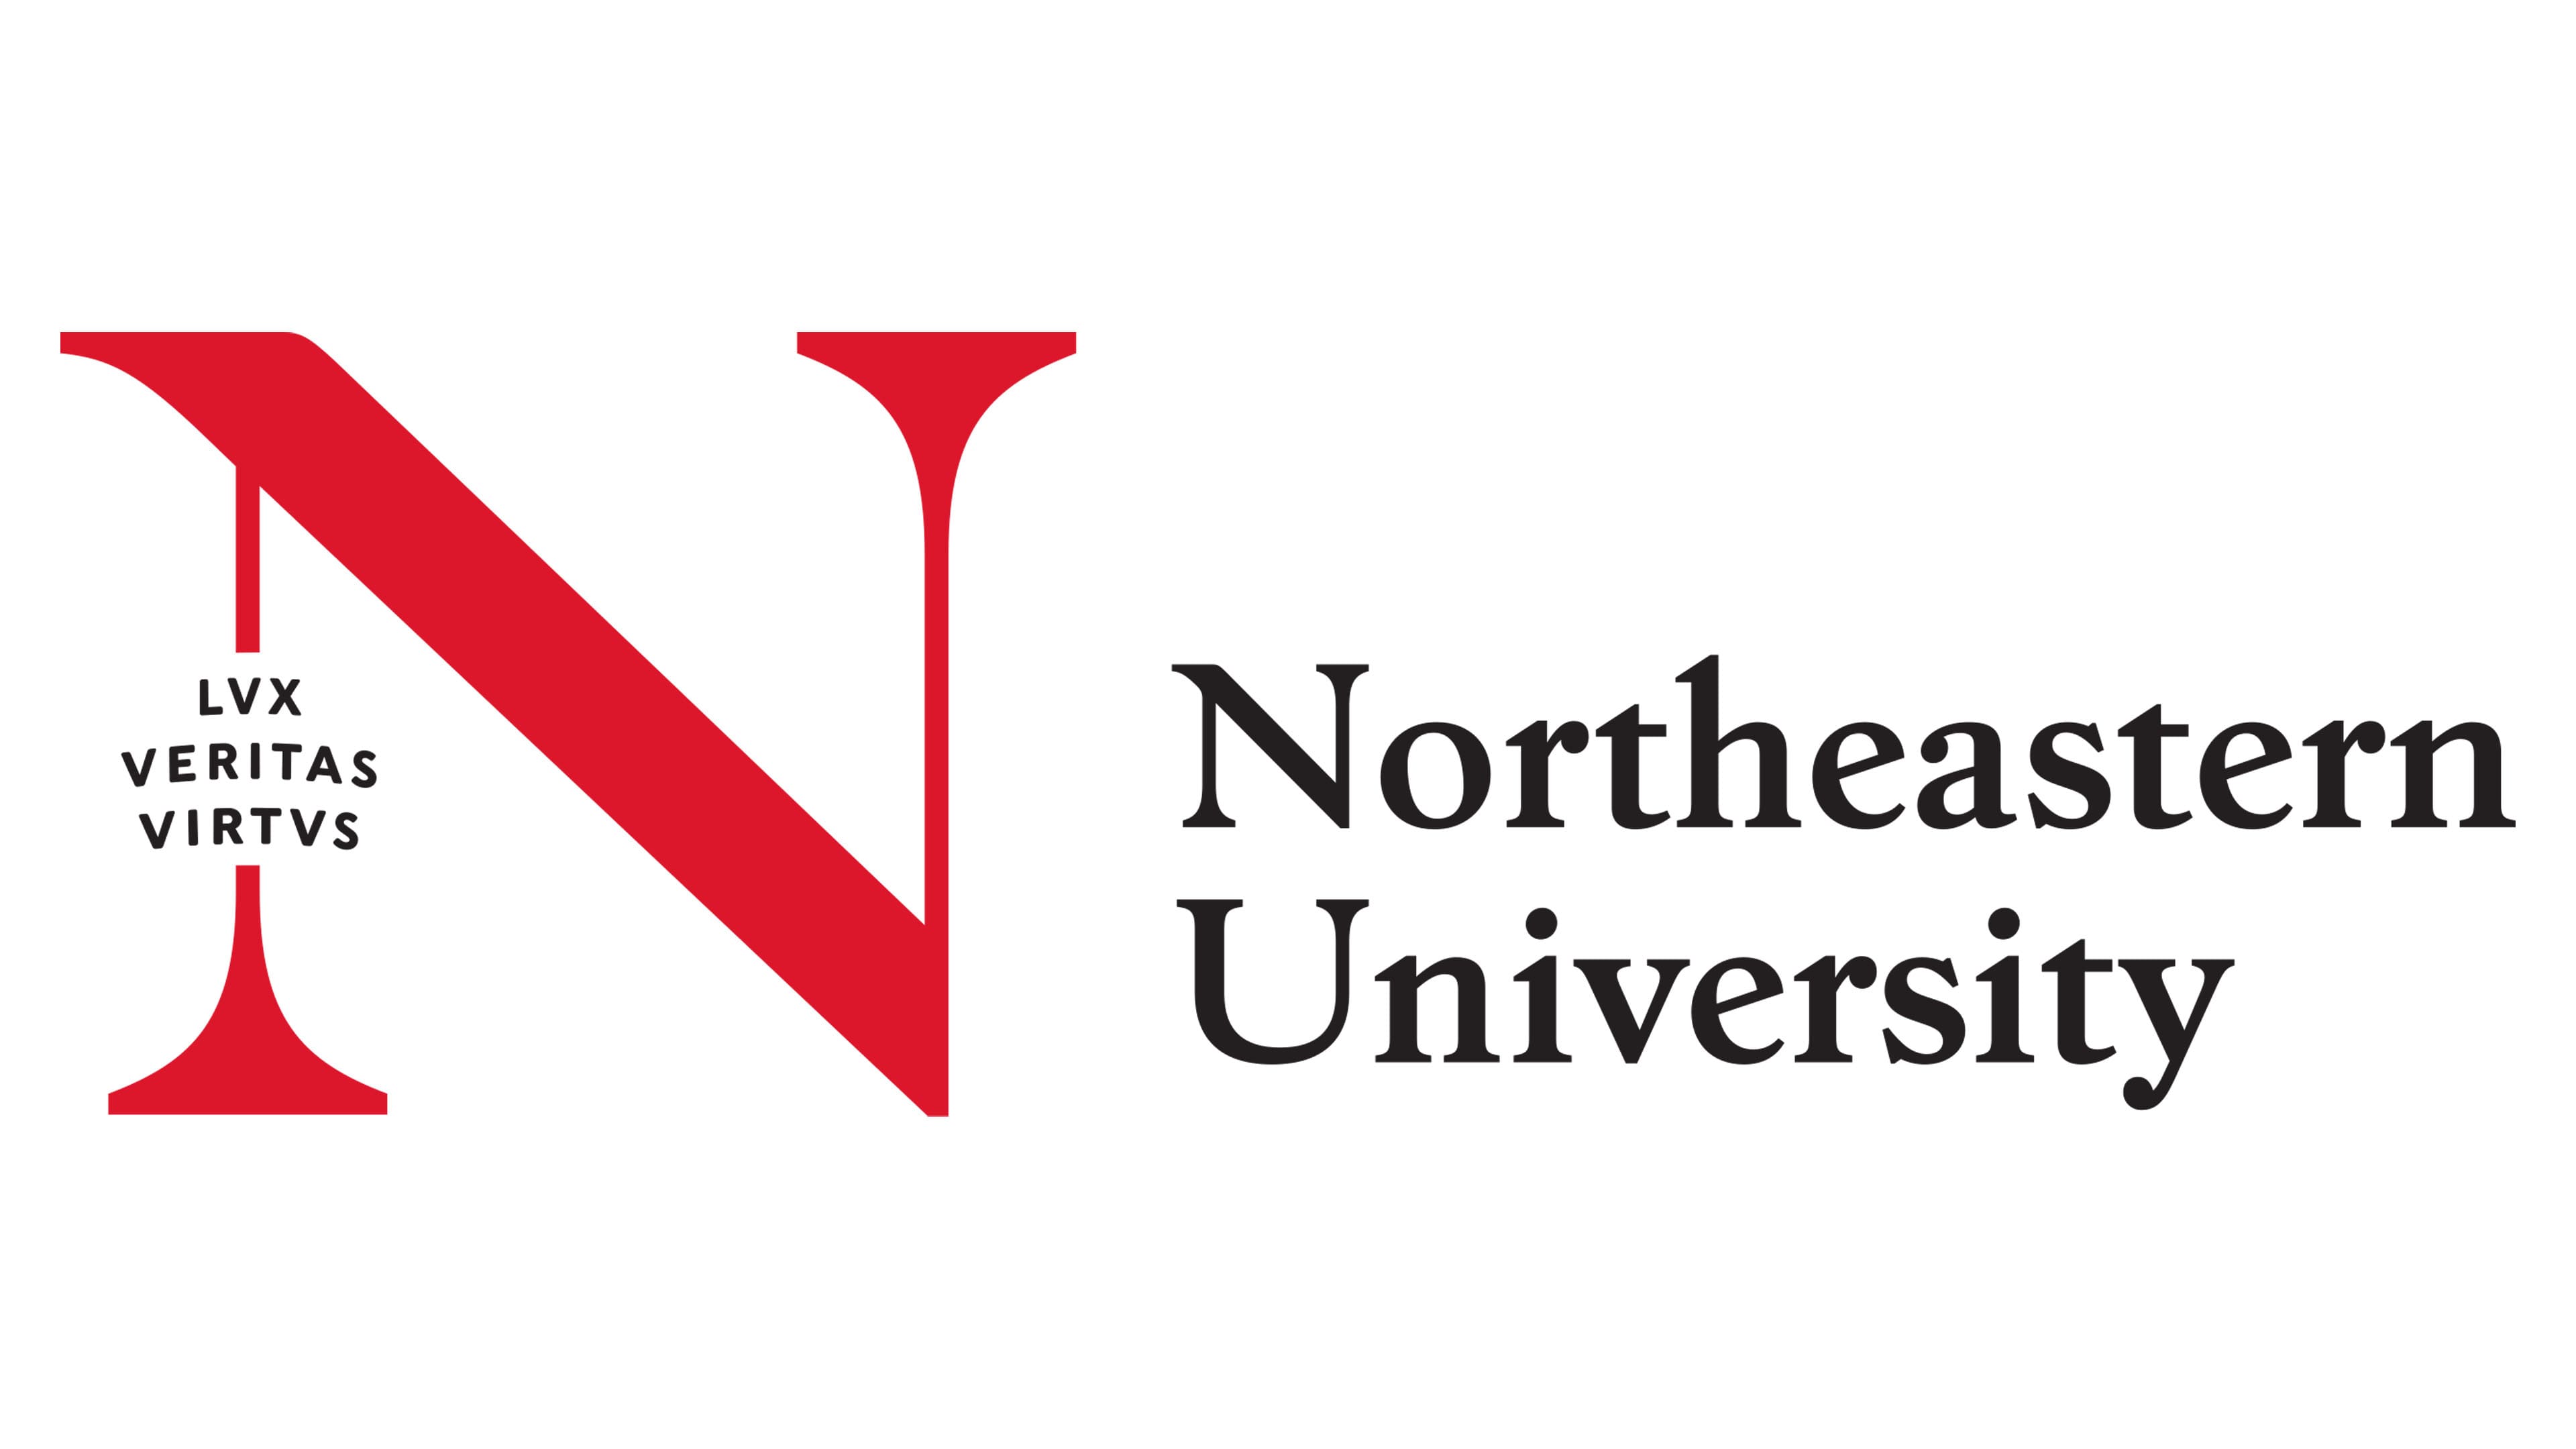 Mẫu thiết kế logo giáo dục Northeastern University 5